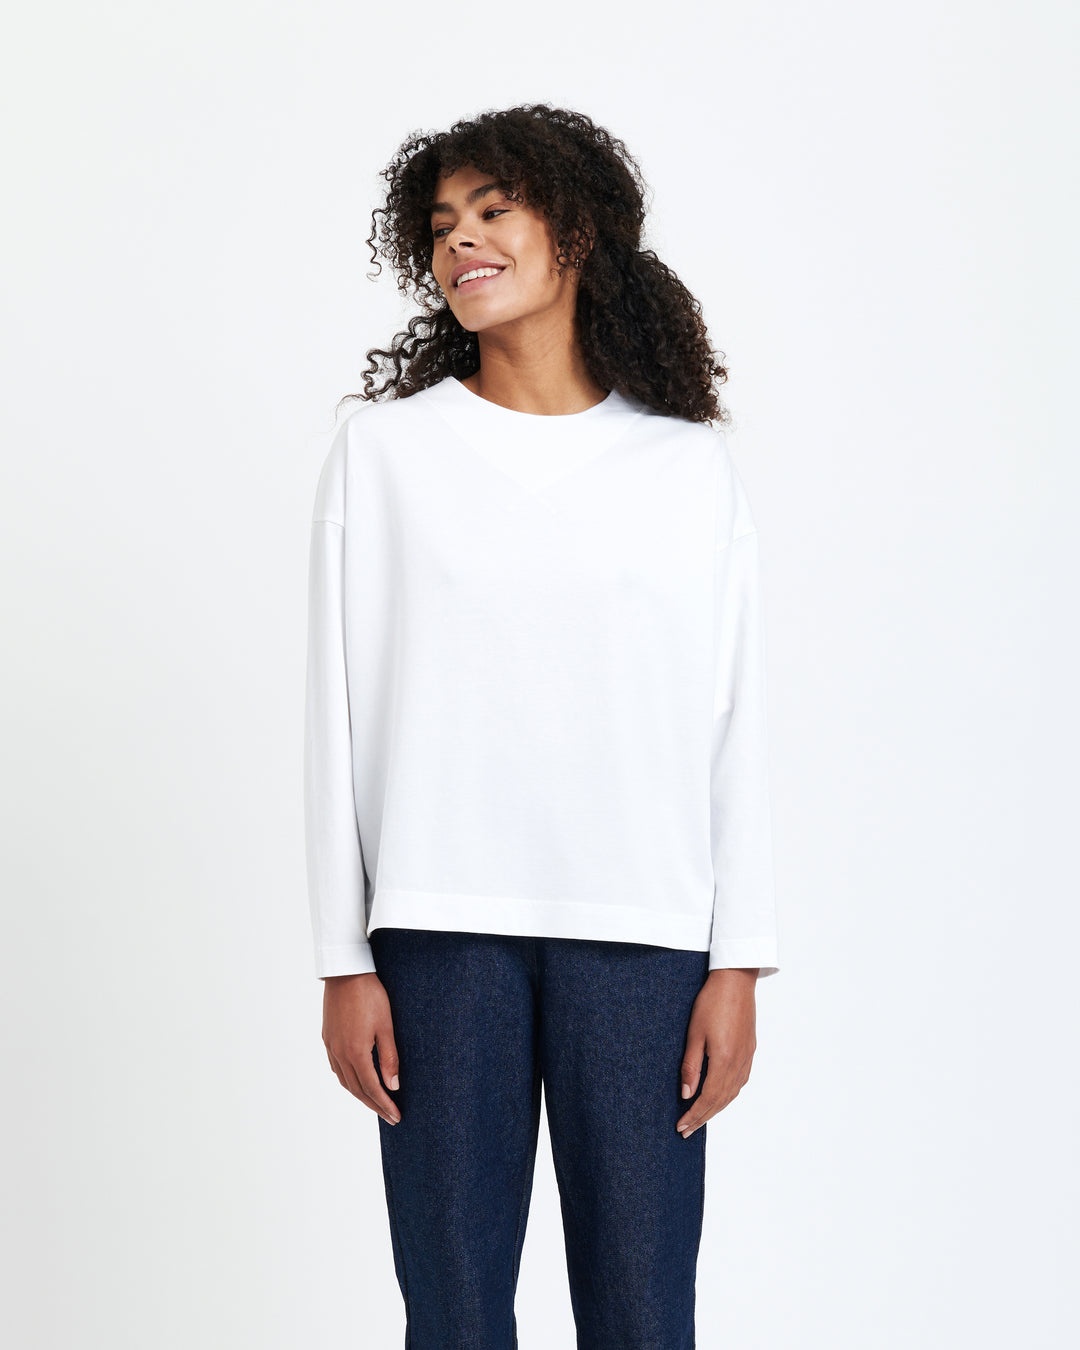 New Optimist womenswear RESPIRO Longsleeve